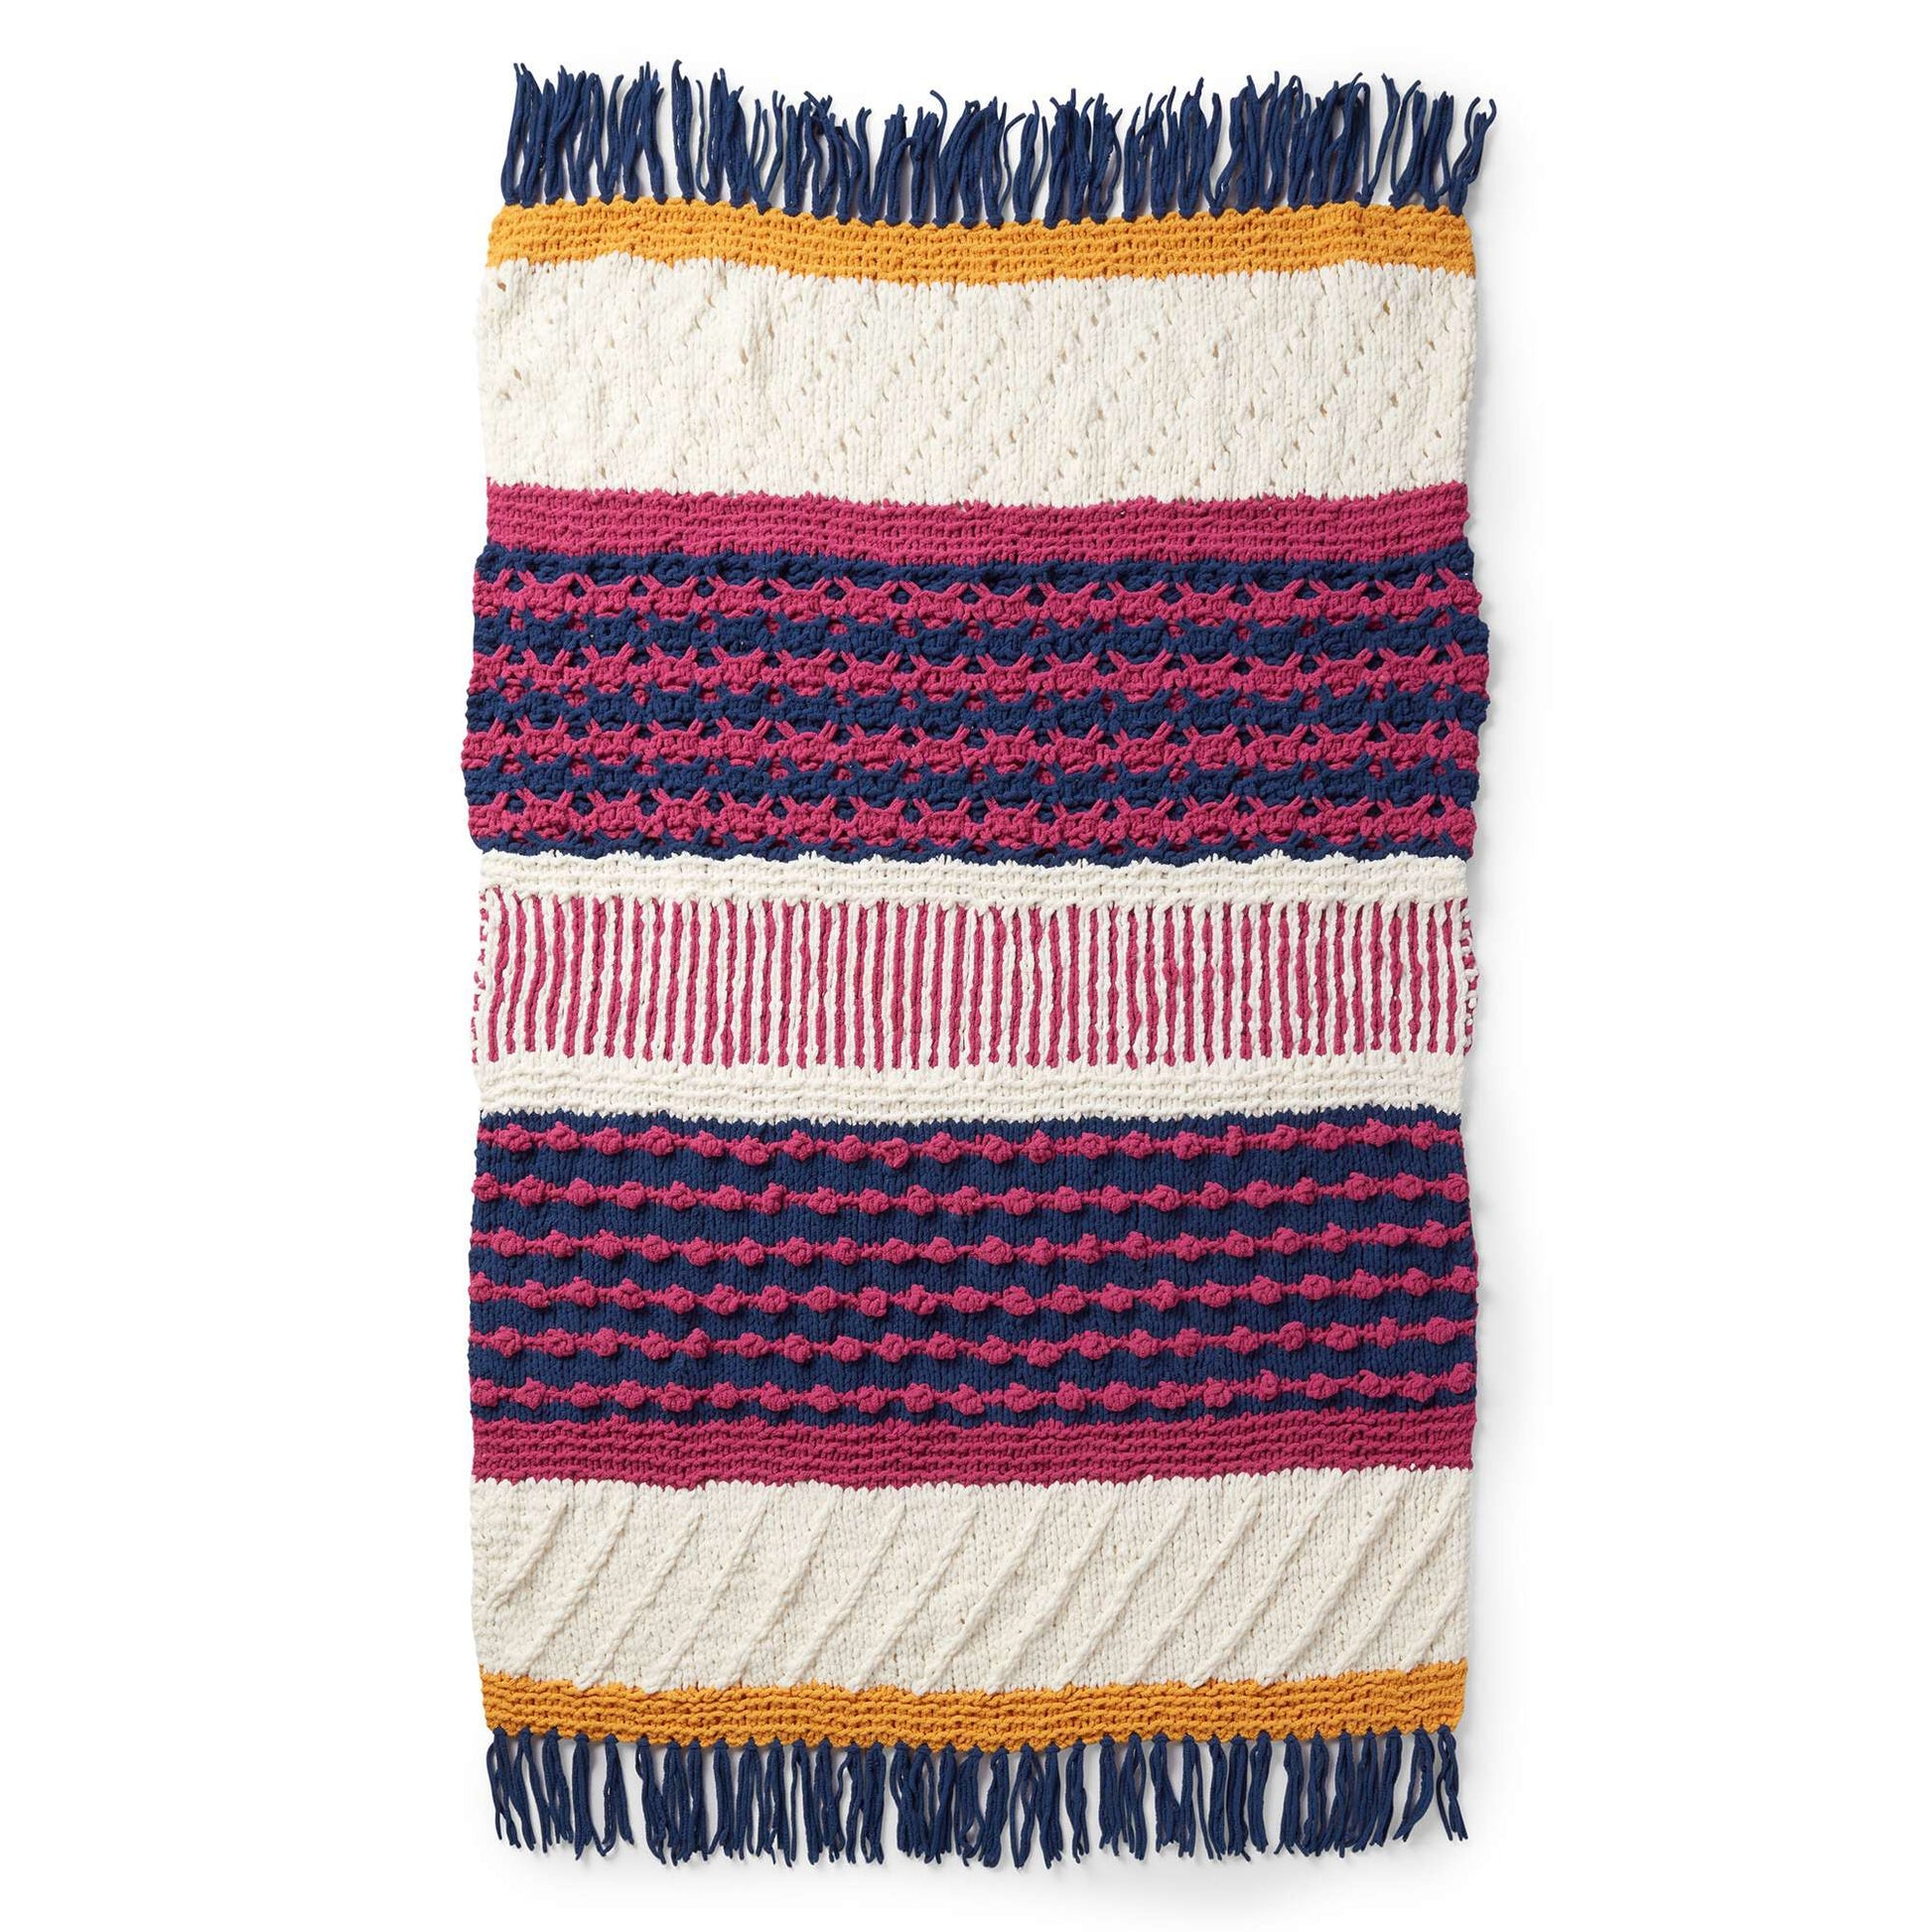 Free Bernat Festive Textures Knit Blanket Pattern